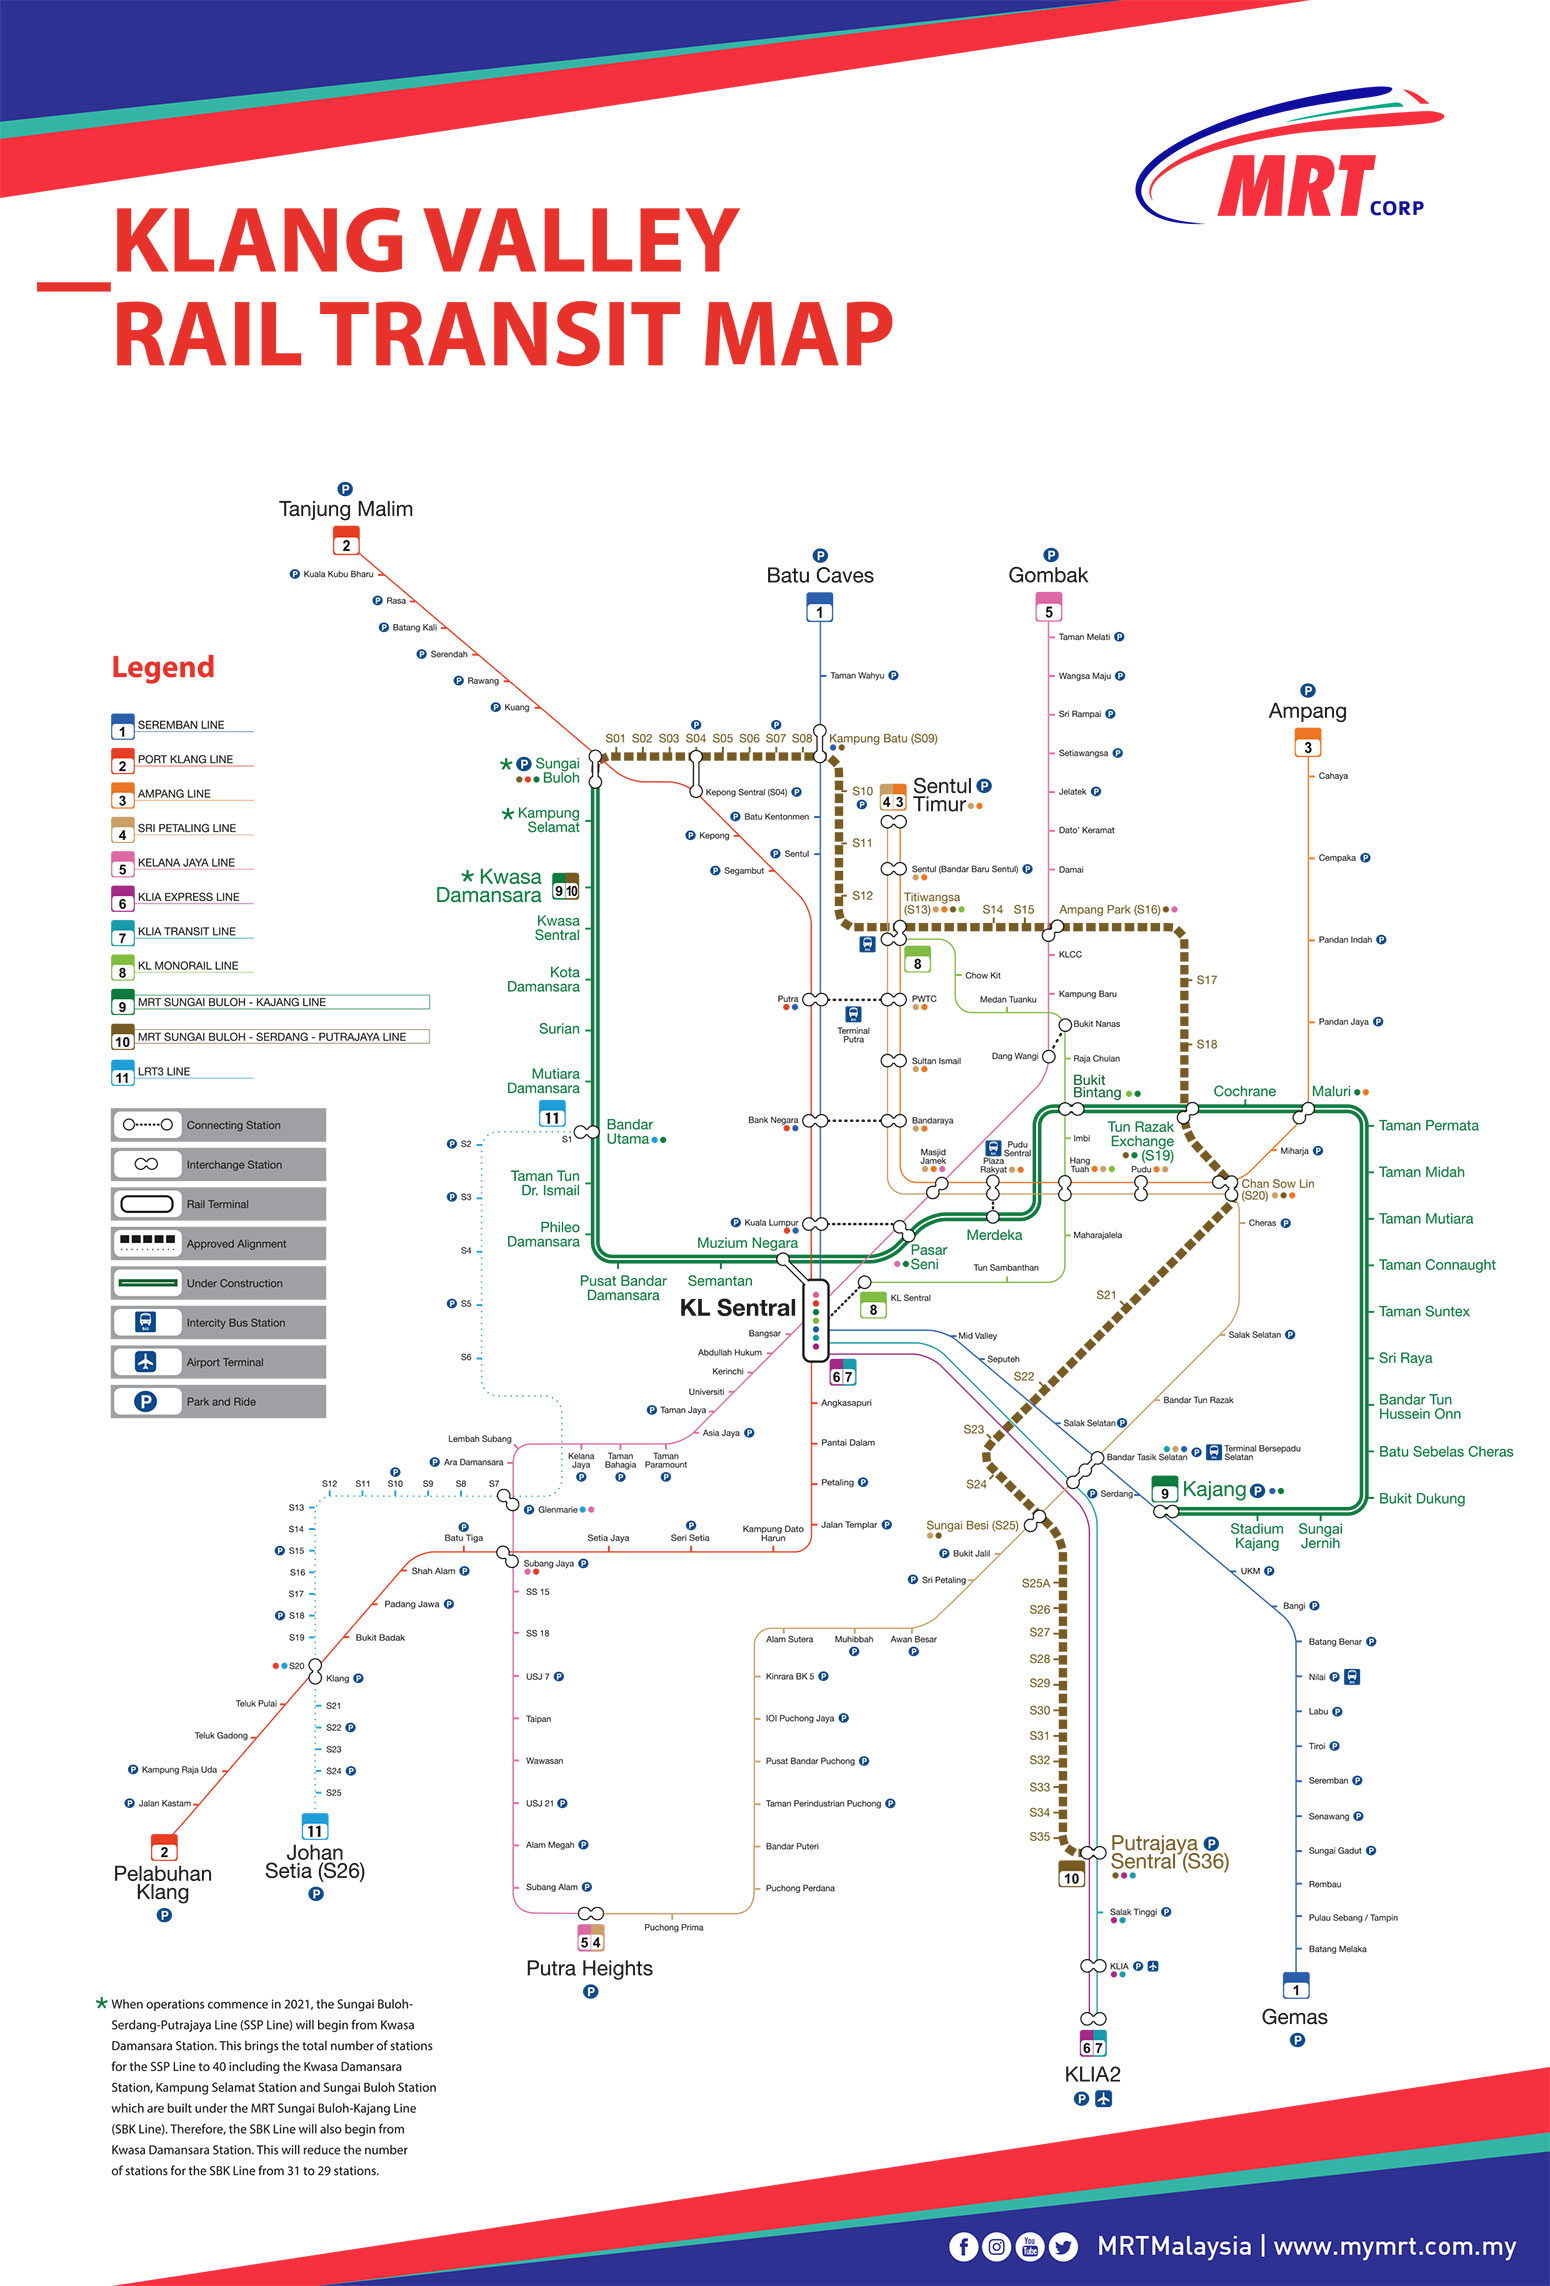 Check MRT / LRT / Monorail / BRT ticket fare from Sungai Buloh station